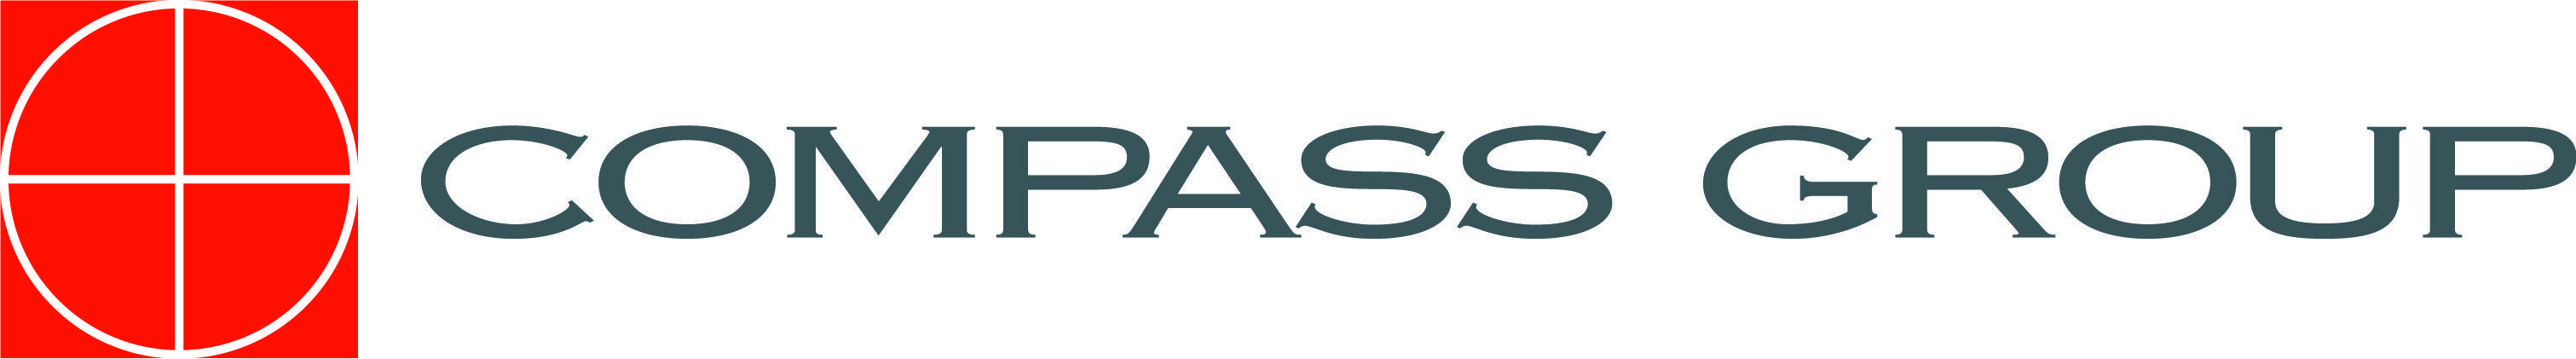 Compass Group Logo - Compass Group Logo